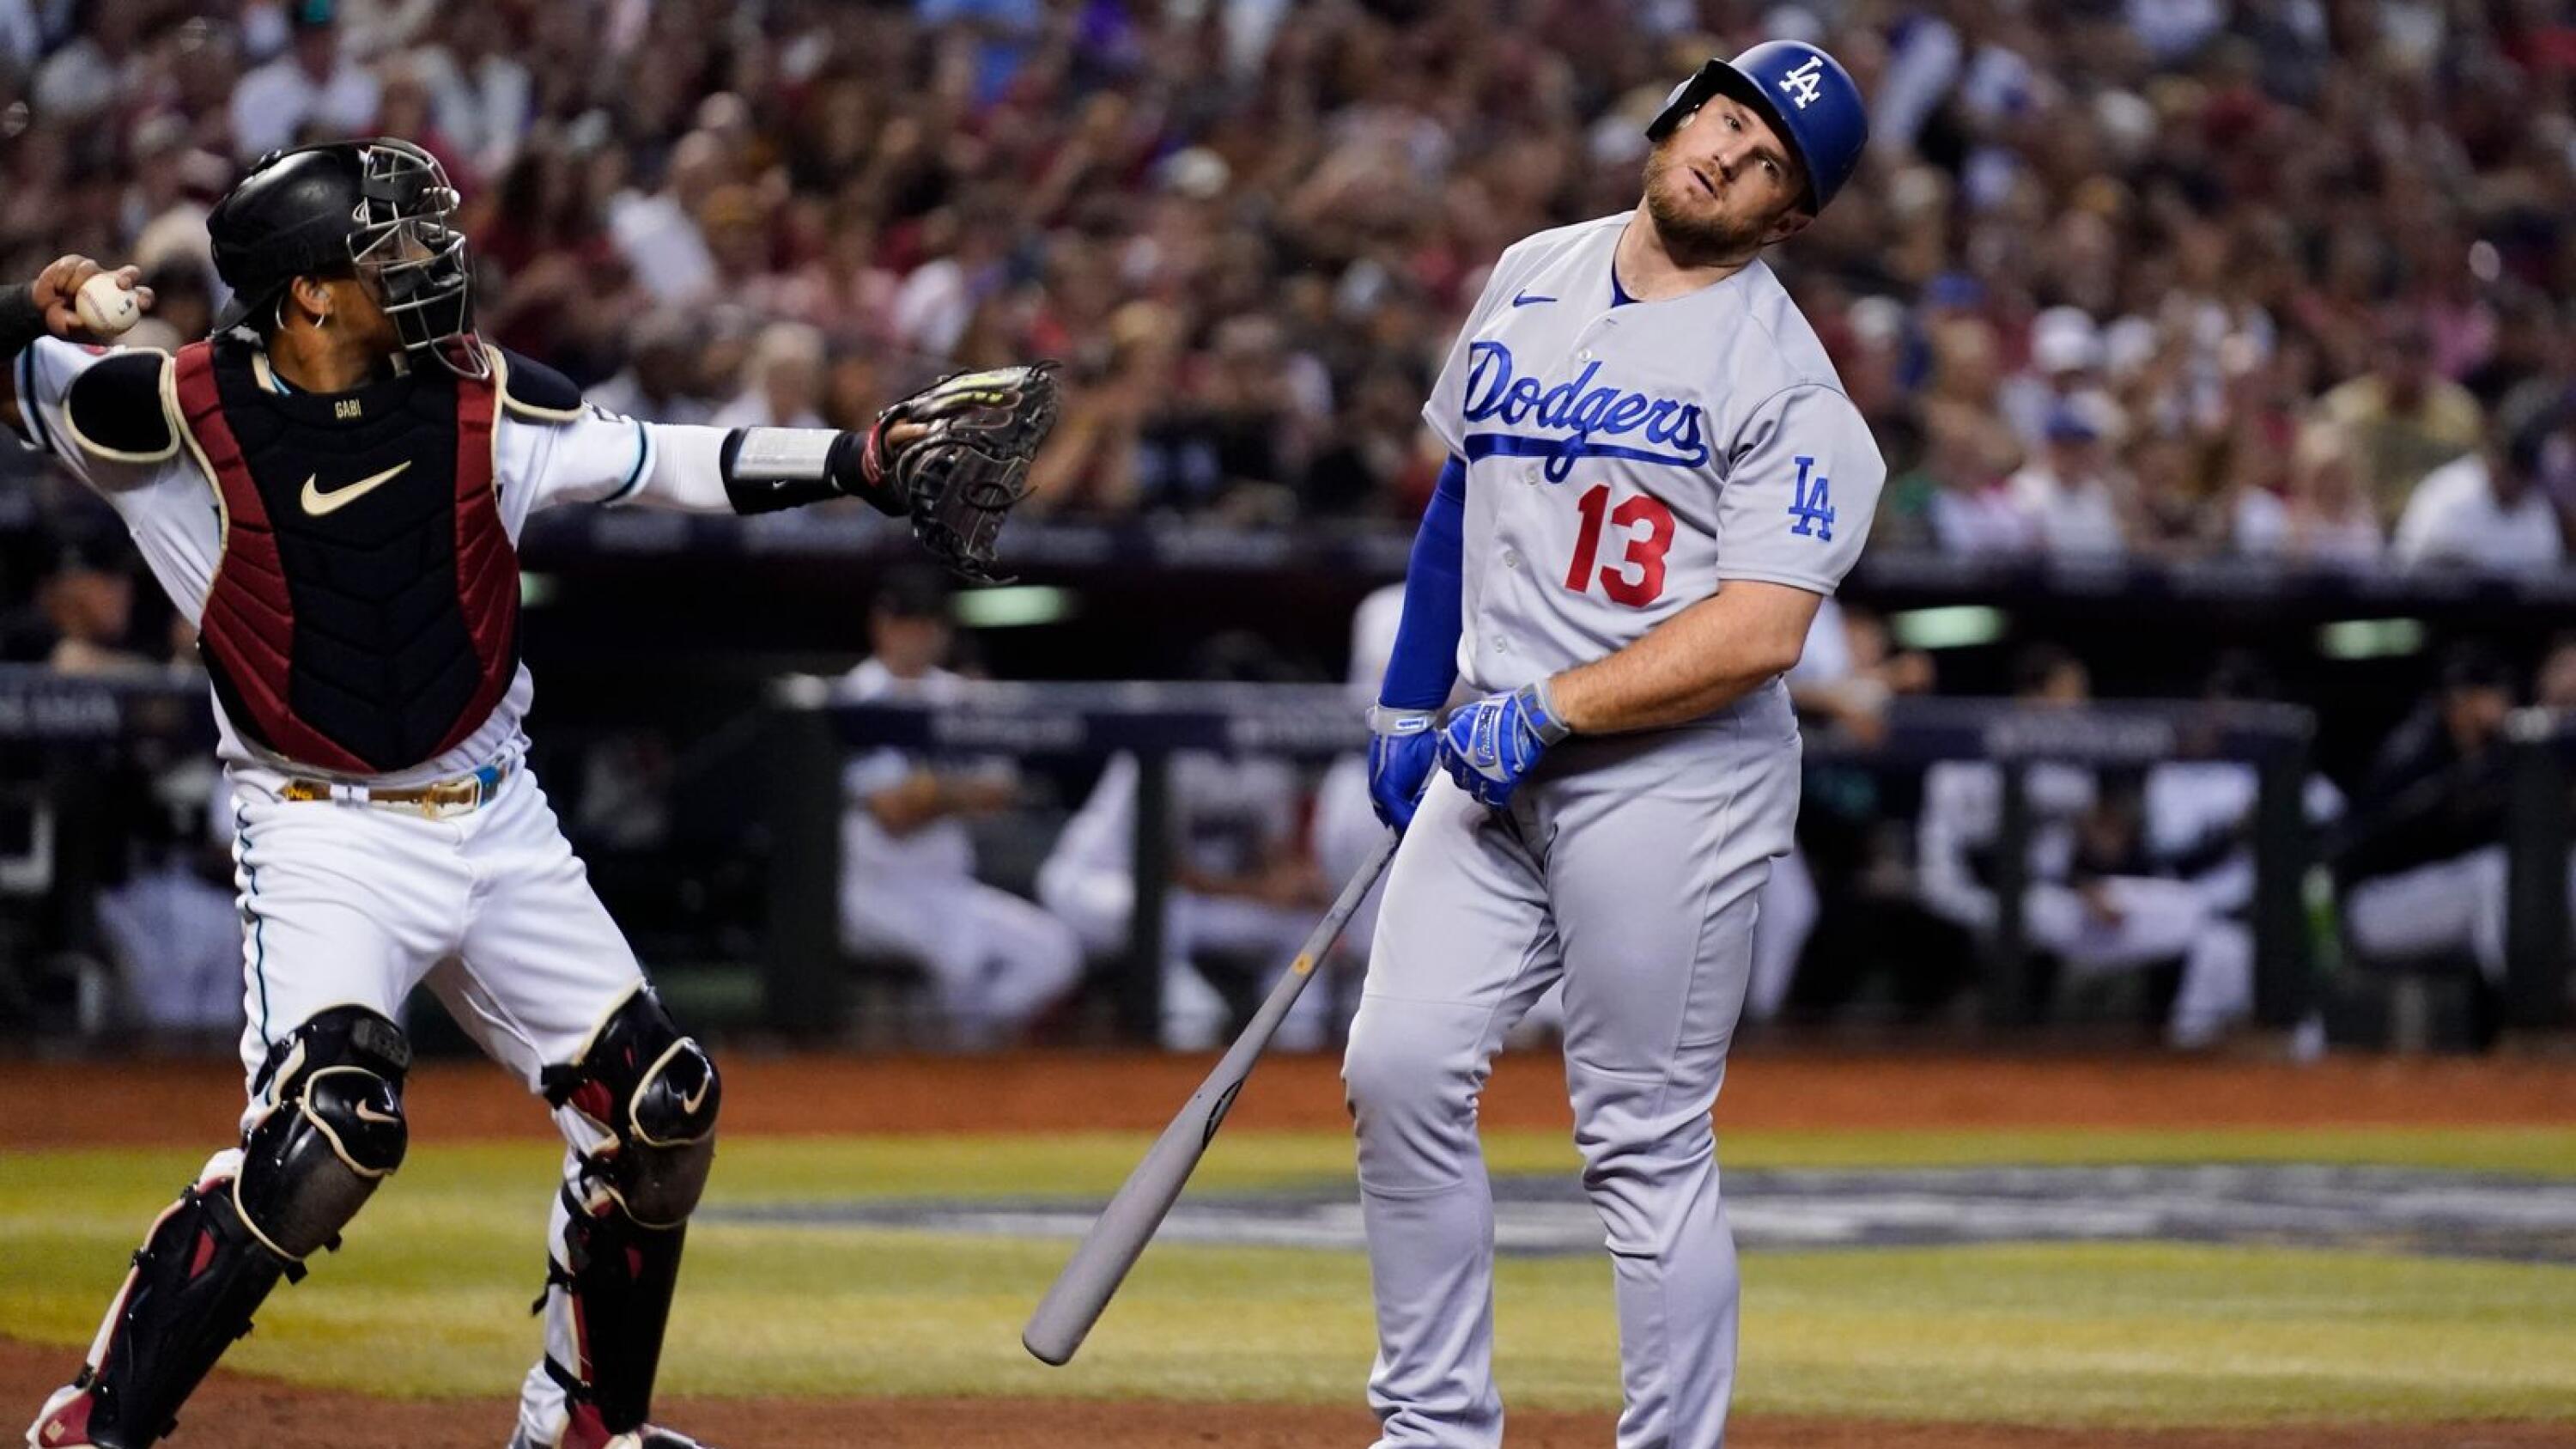 In photos: MLB: Arizona Diamondbacks sweep Los Angeles Dodgers - All Photos  